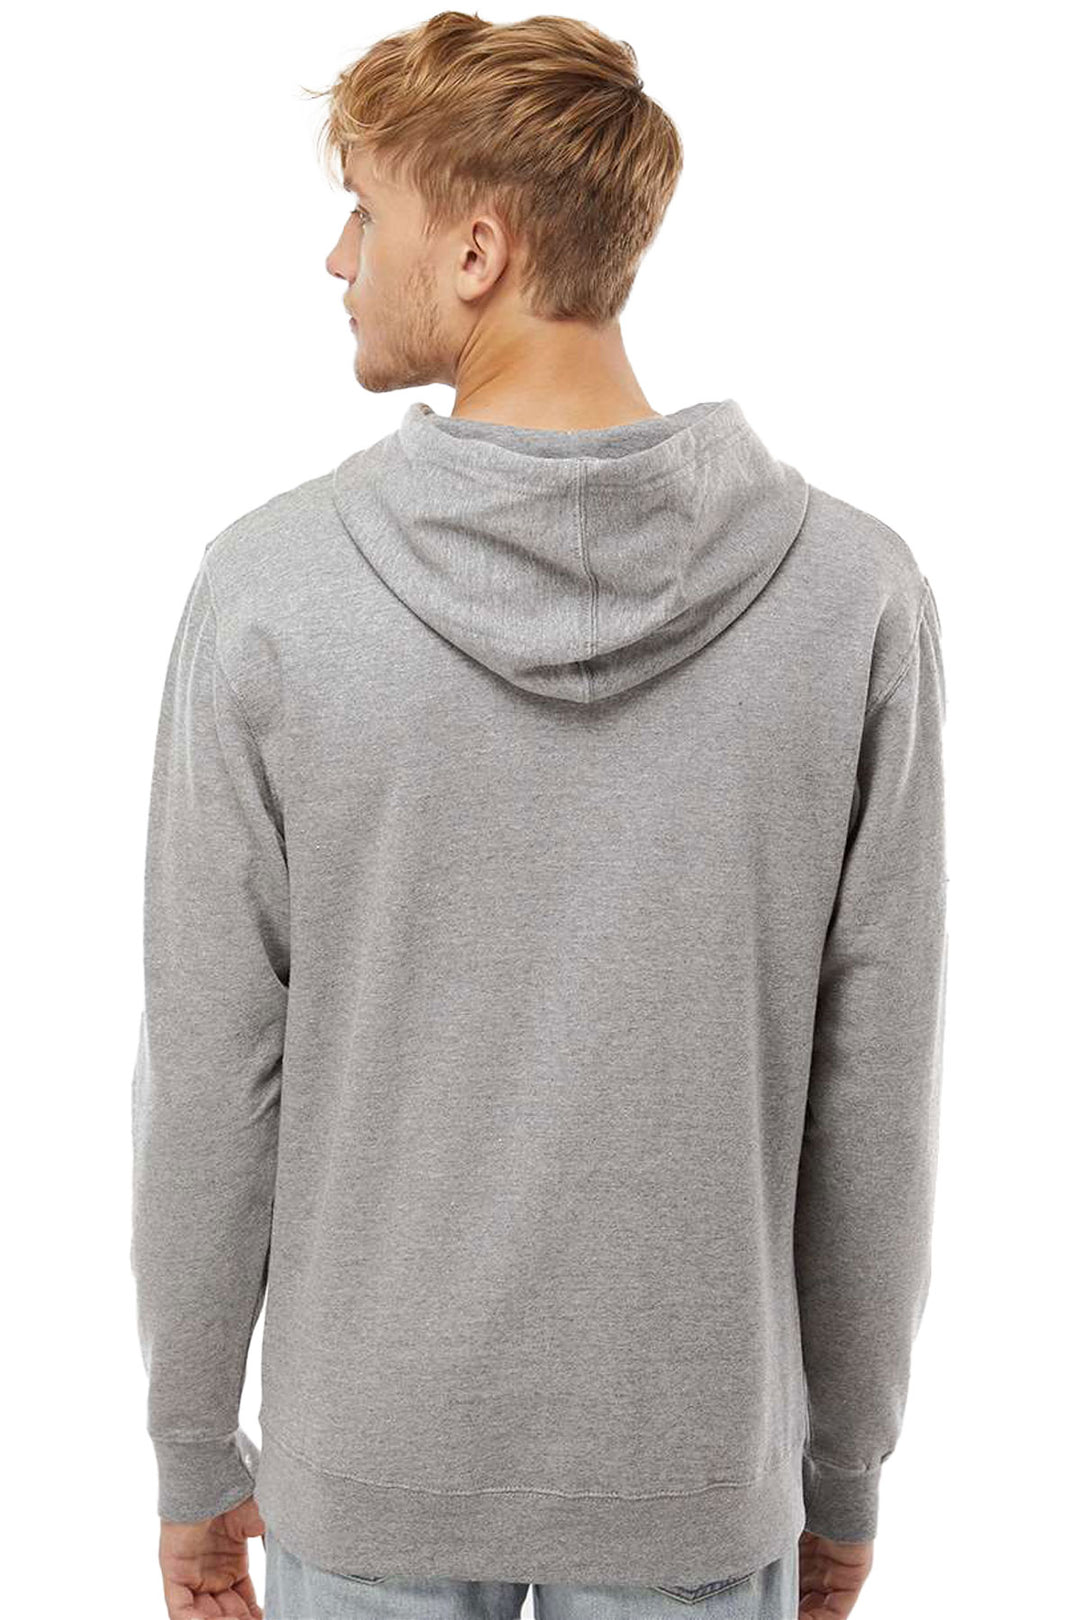 NOMO Basic Hooded Sweatshirt